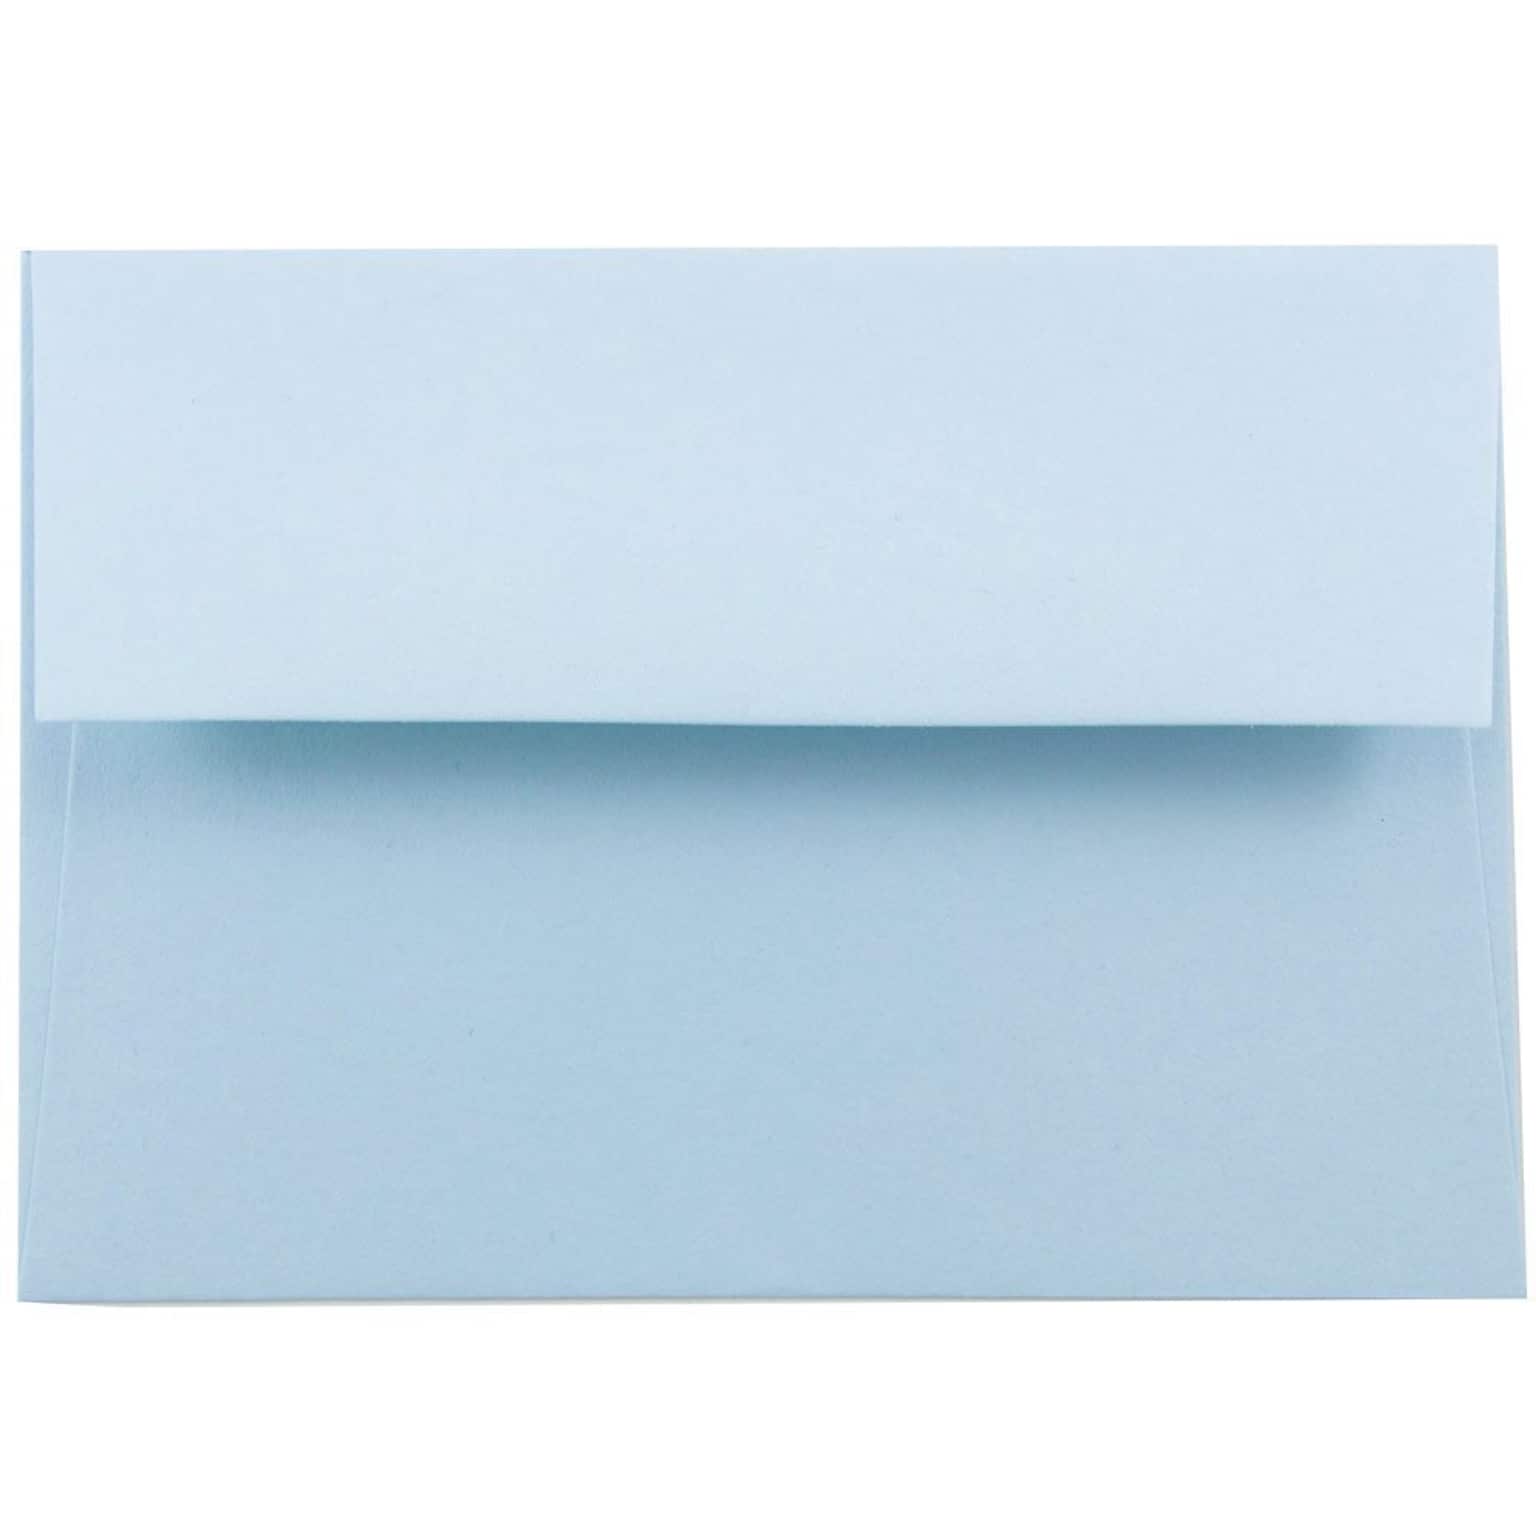 JAM Paper® A7 Invitation Envelopes, 5.25 x 7.25, Baby Blue, Bulk 250/Box (155628H)